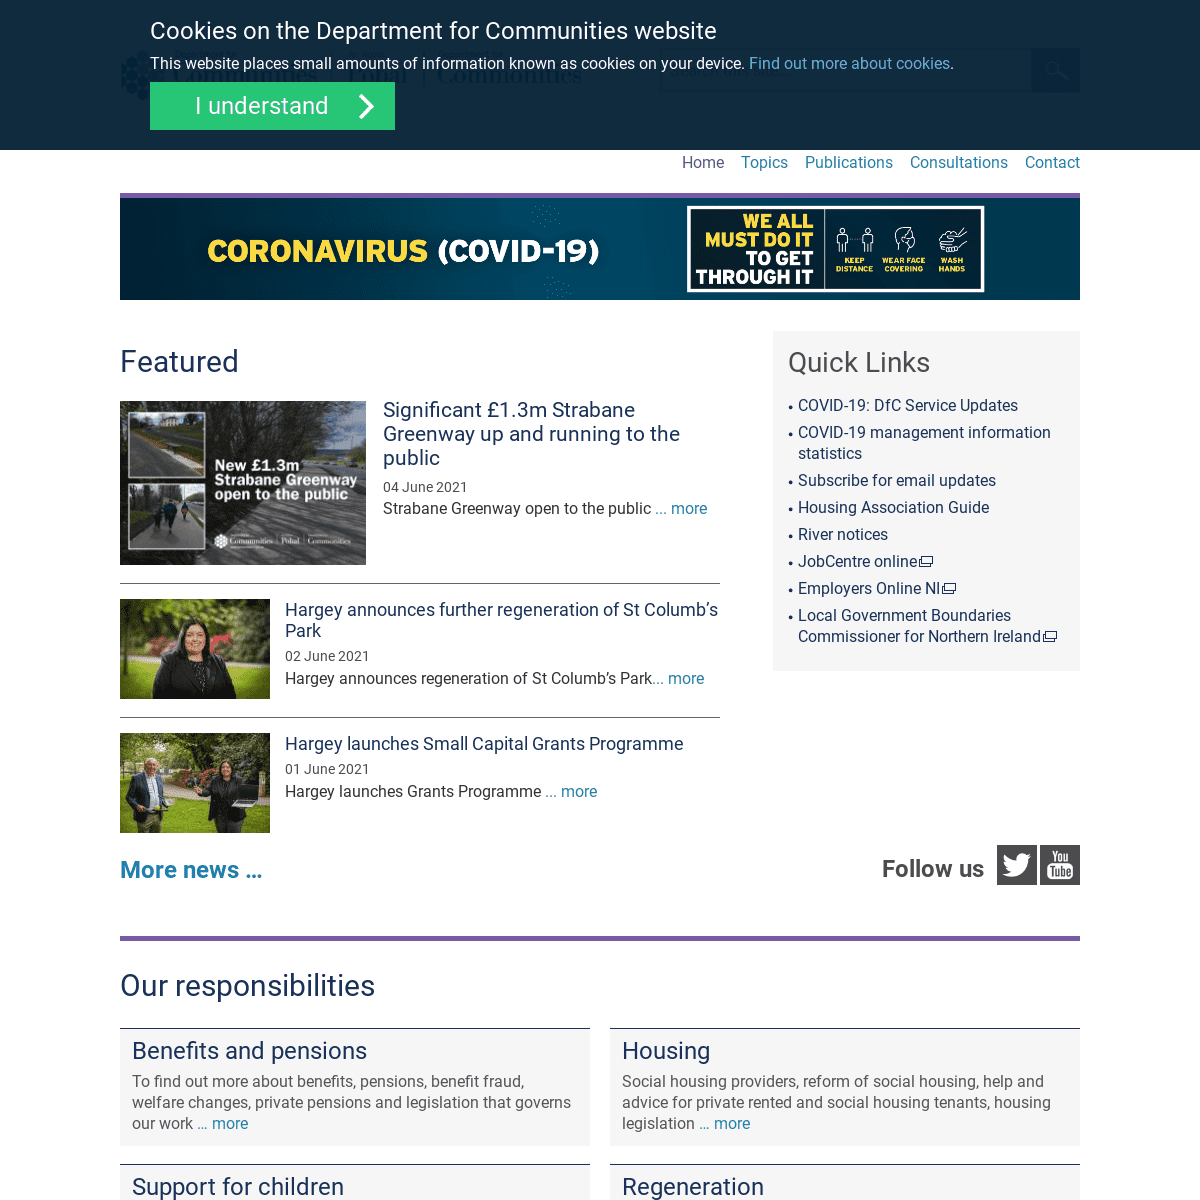 A complete backup of https://communities-ni.gov.uk